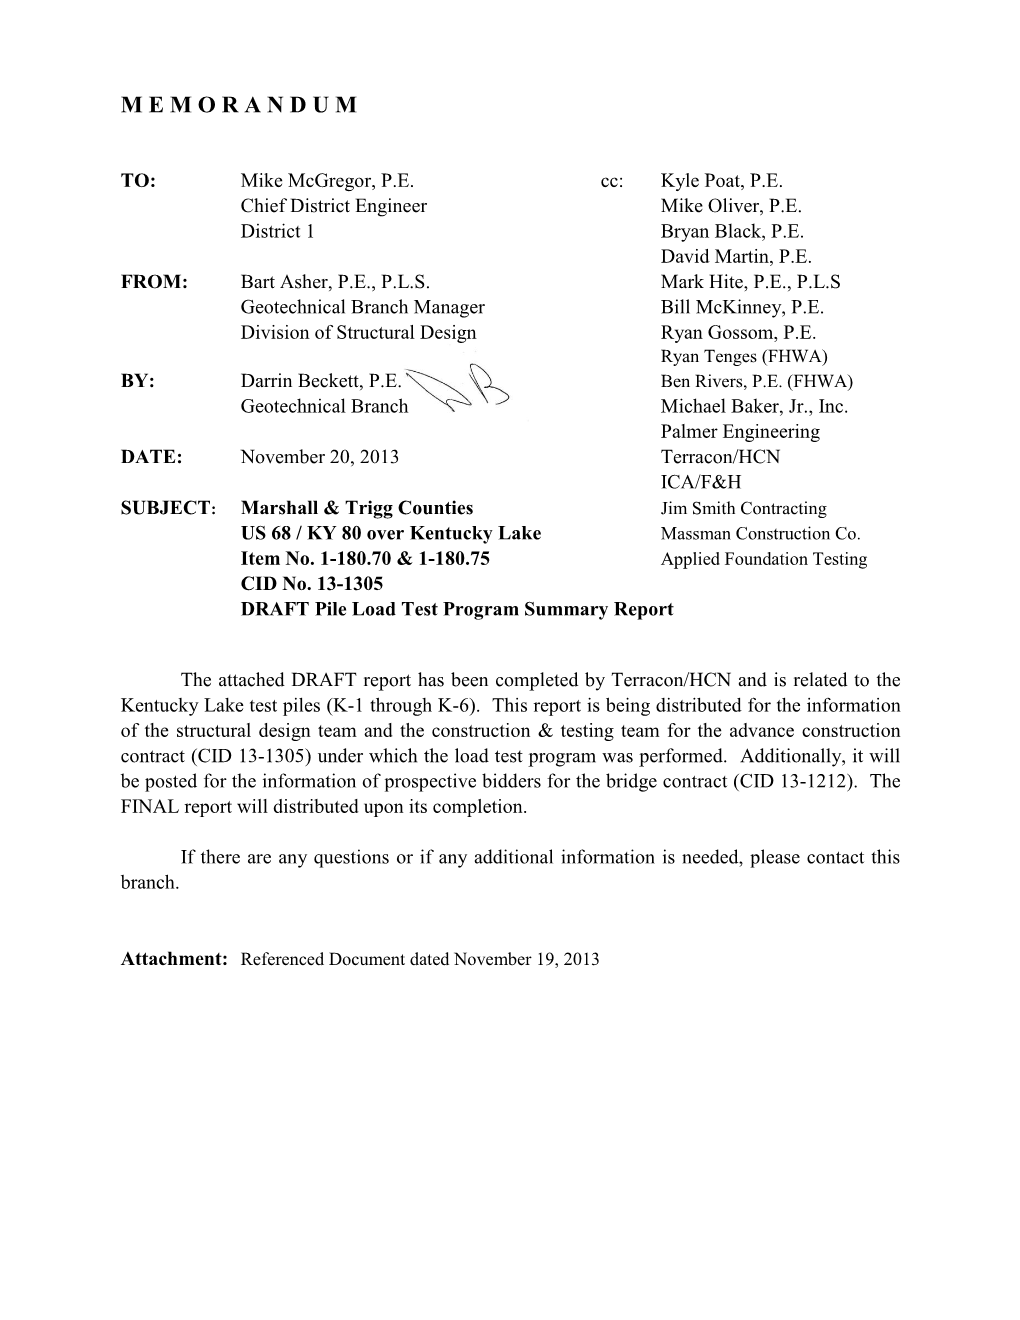 DRAFT Pile Load Test Program Summary Report